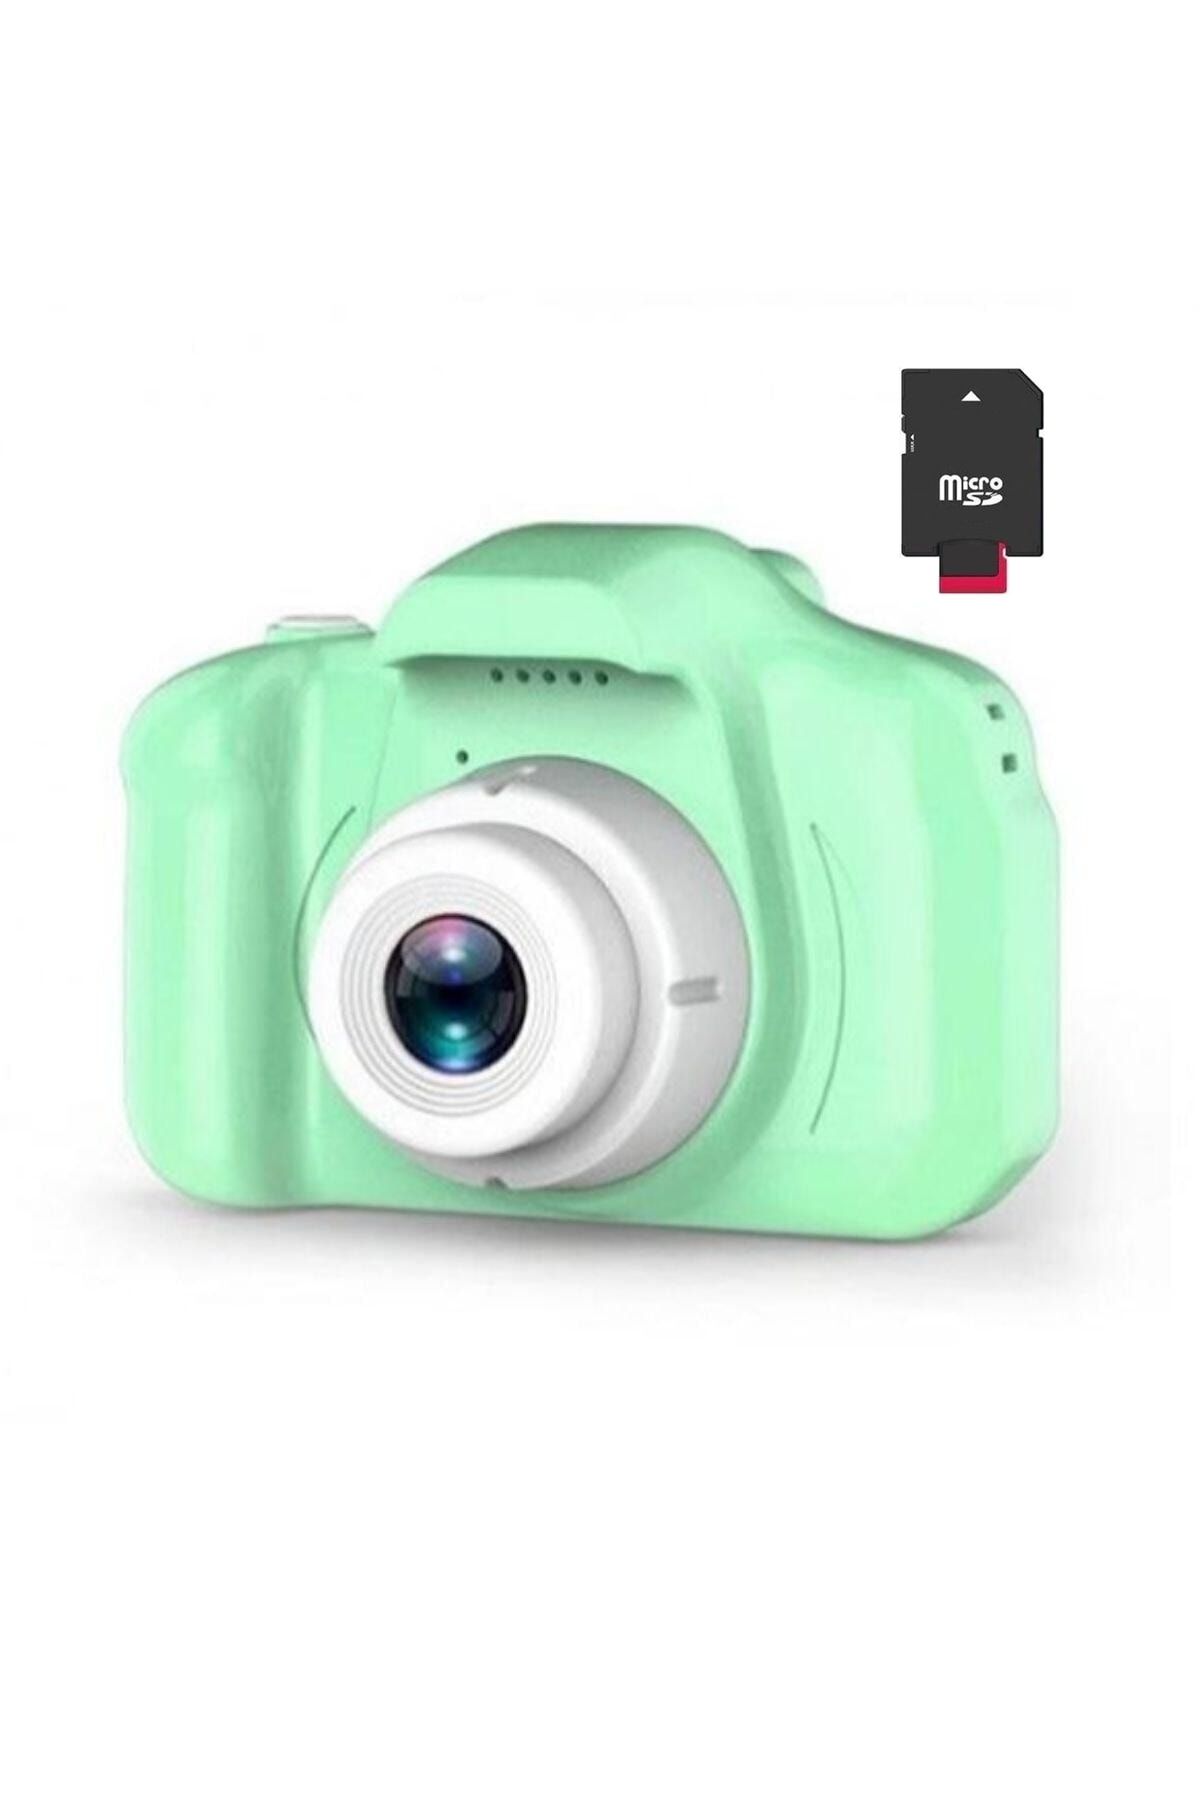 whitetech Yeşil Renk Mini 1080phd Çocuk Kamera Dijital Fotoğraf Makinesi 2.0 Inç Ekran+16 Gb Sd Kart Hediyeli